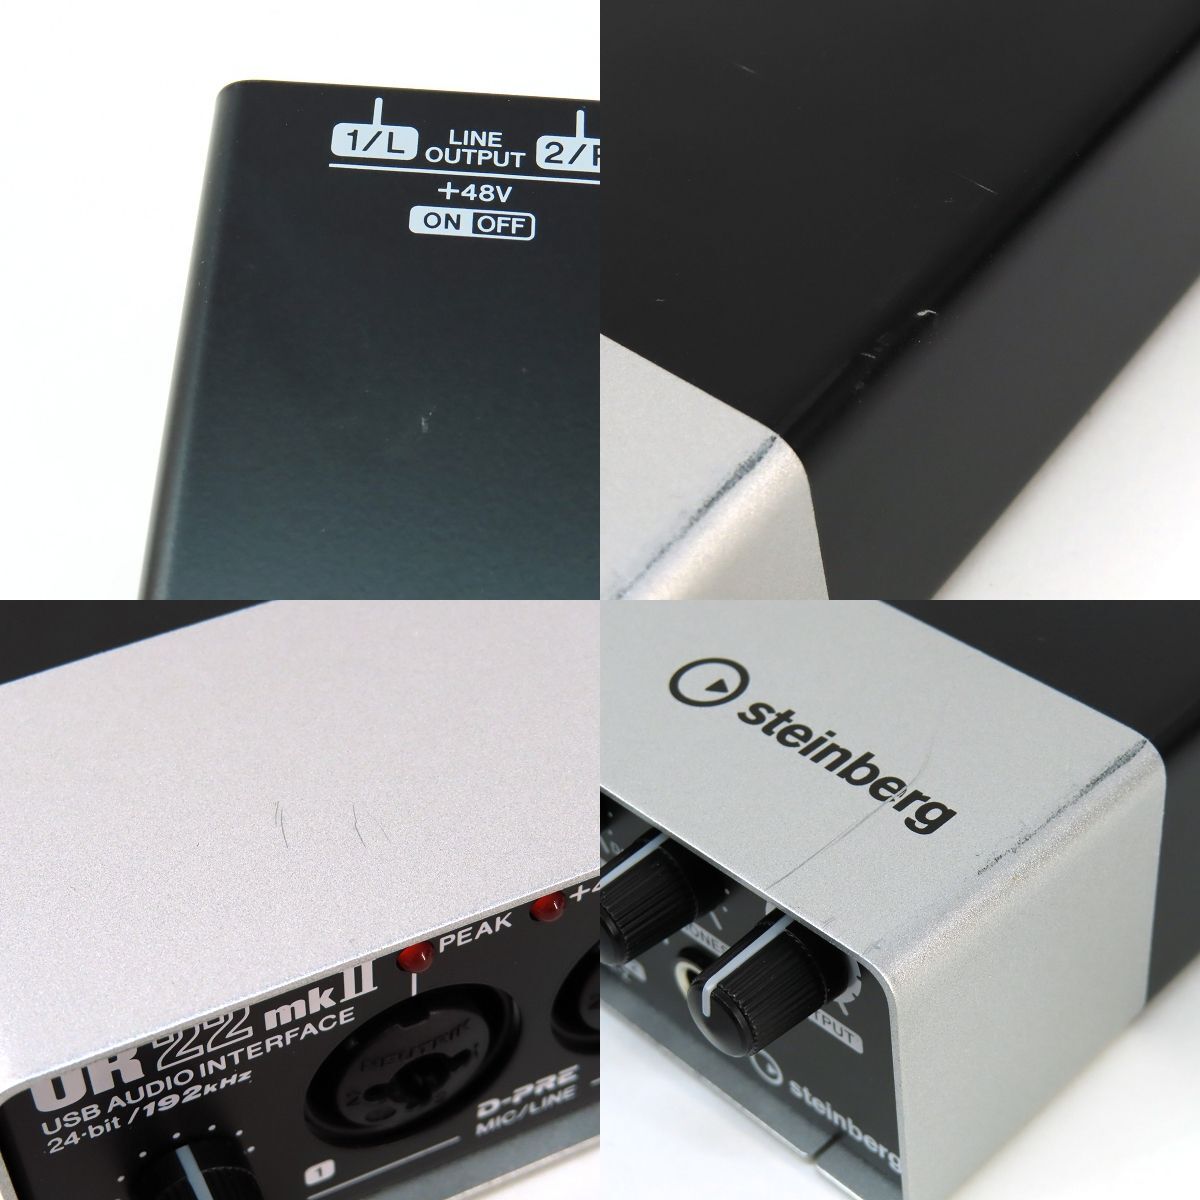 095s*Steinberg старт Inver gUR22 mkII аудио интерфейс USB модель * б/у 